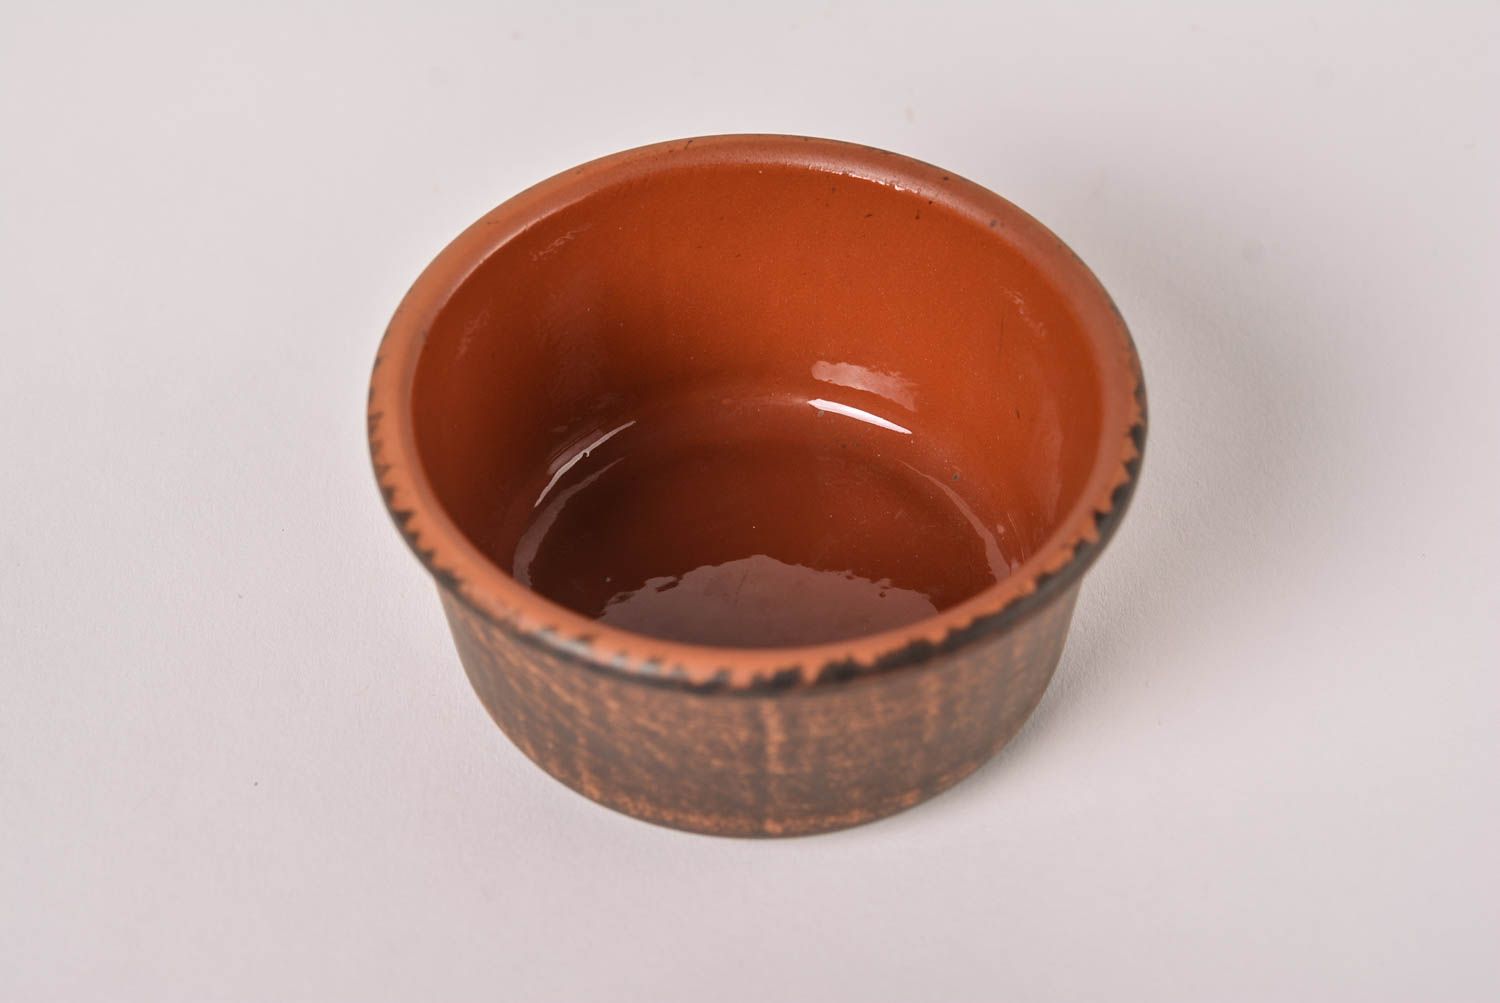 Small handmade ceramic salt shaker ceramic bowl kitchen utensils spice pot ideas photo 3